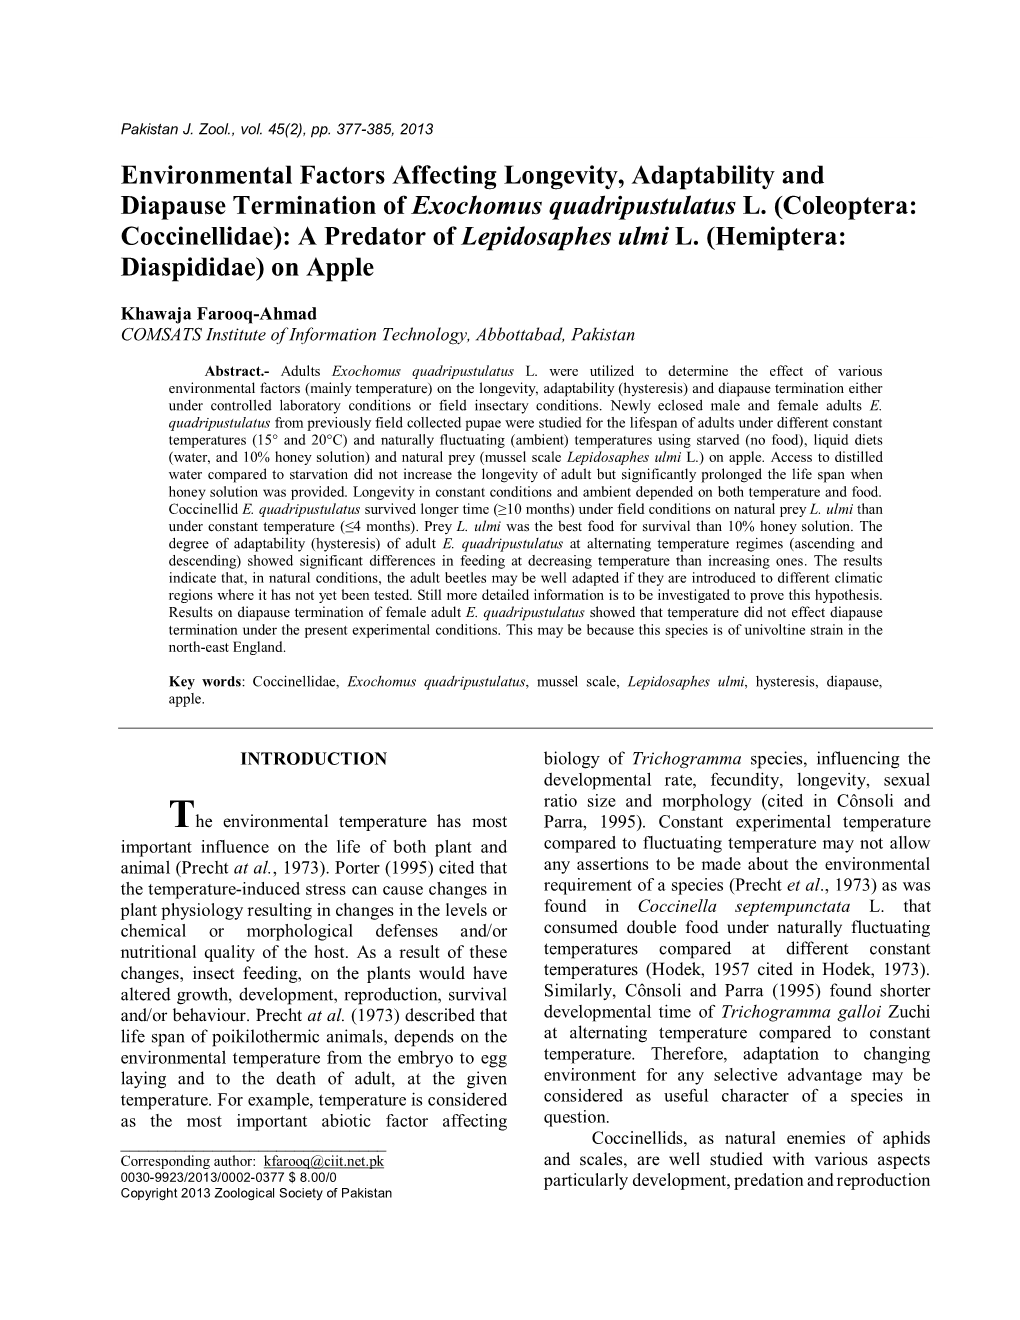 Environmental Factors Affecting Longevity, Adaptability and Diapause Termination of Exochomus Quadripustulatus L